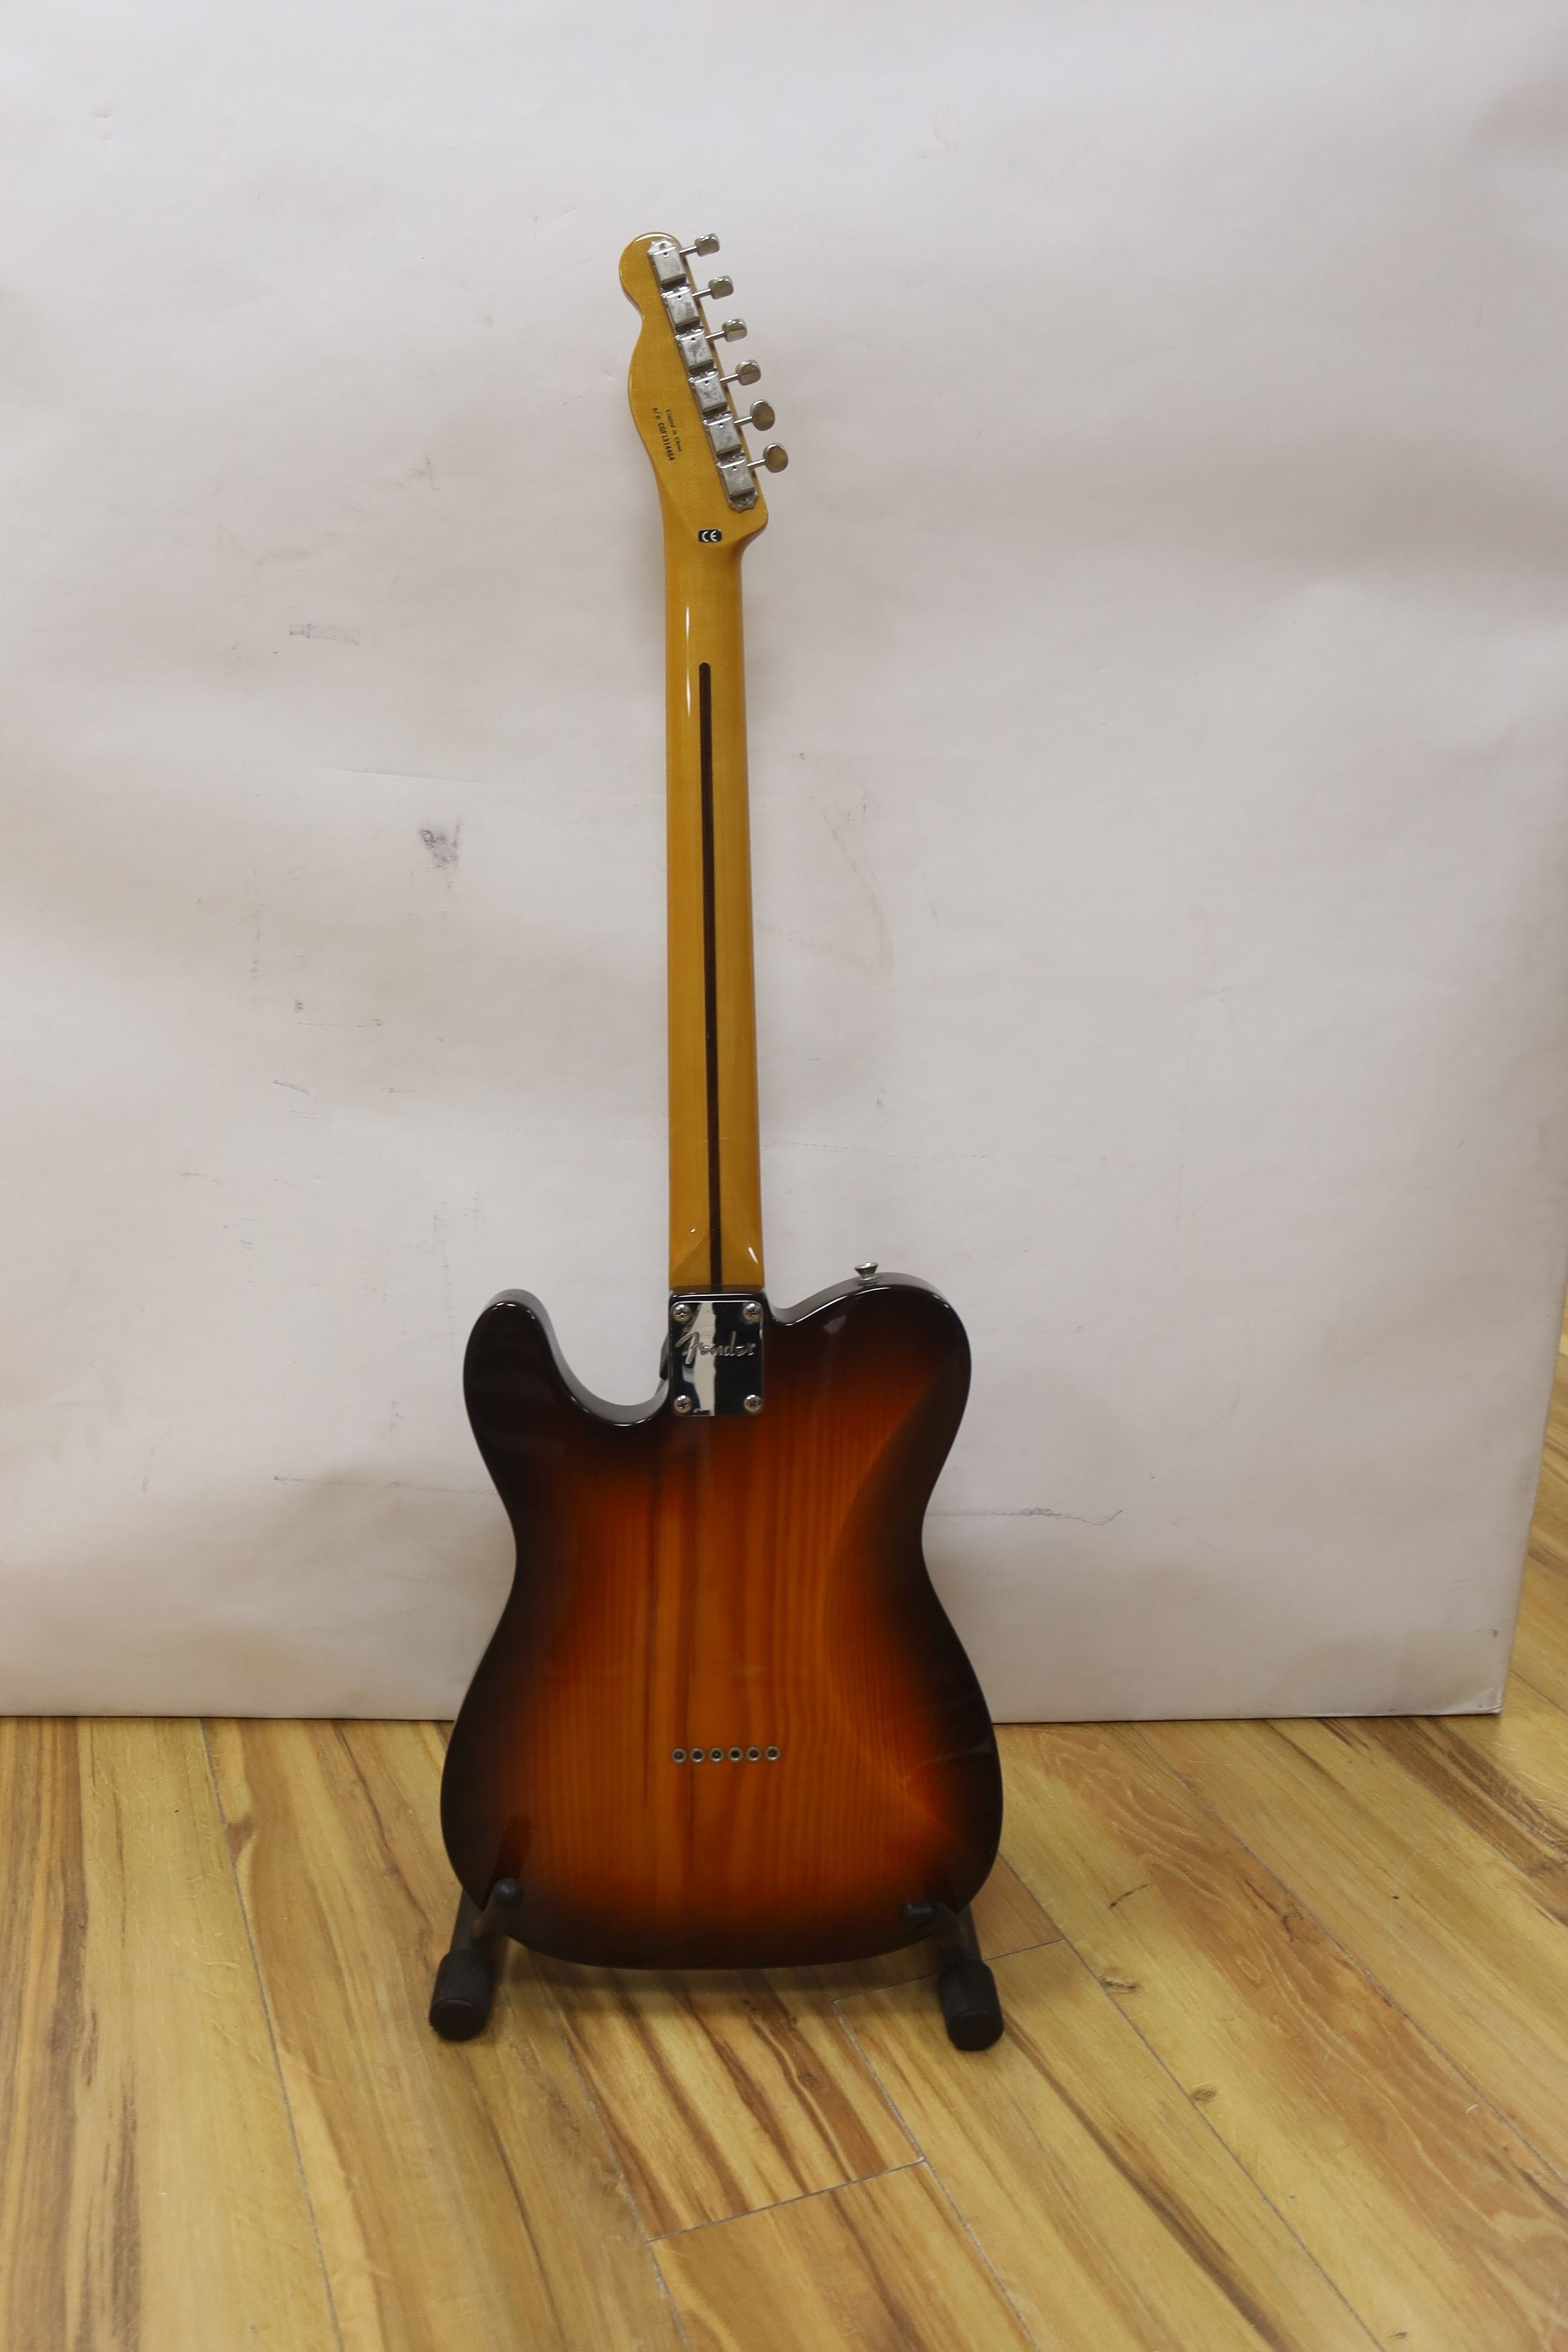 A Fender Telecaster guitar. Serial number CGF1314464